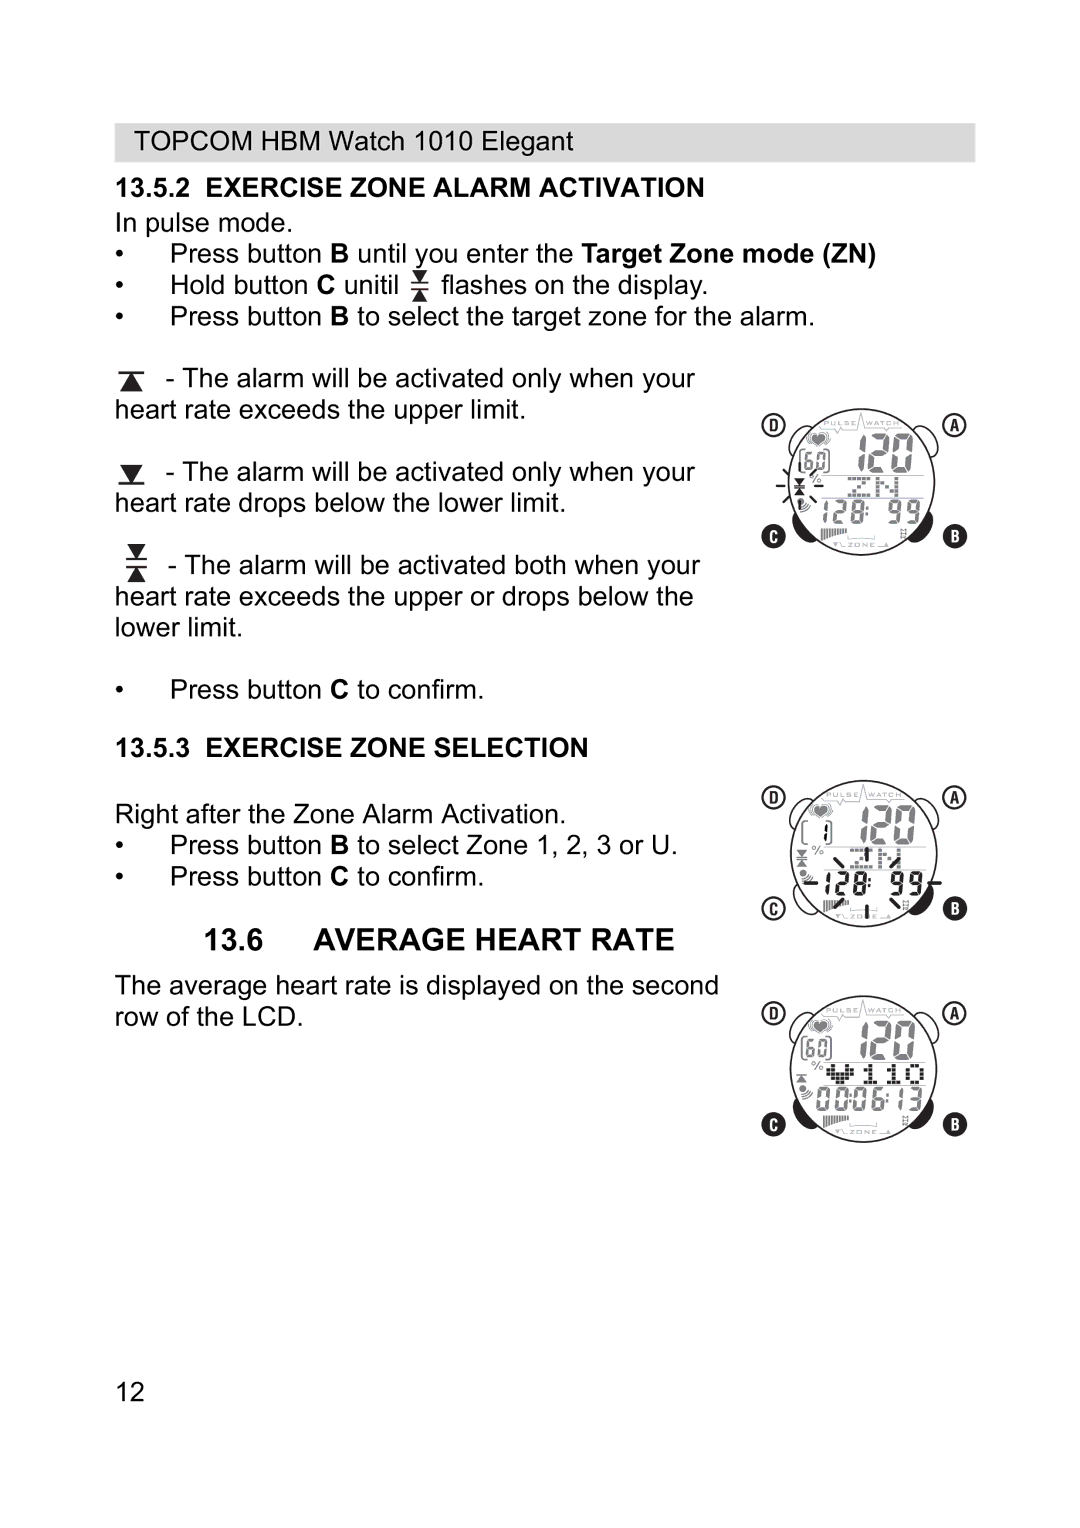 Topcom 1010 Elelgant manual Average Heart Rate, Exercise Zone Alarm Activation, Exercise Zone Selection 